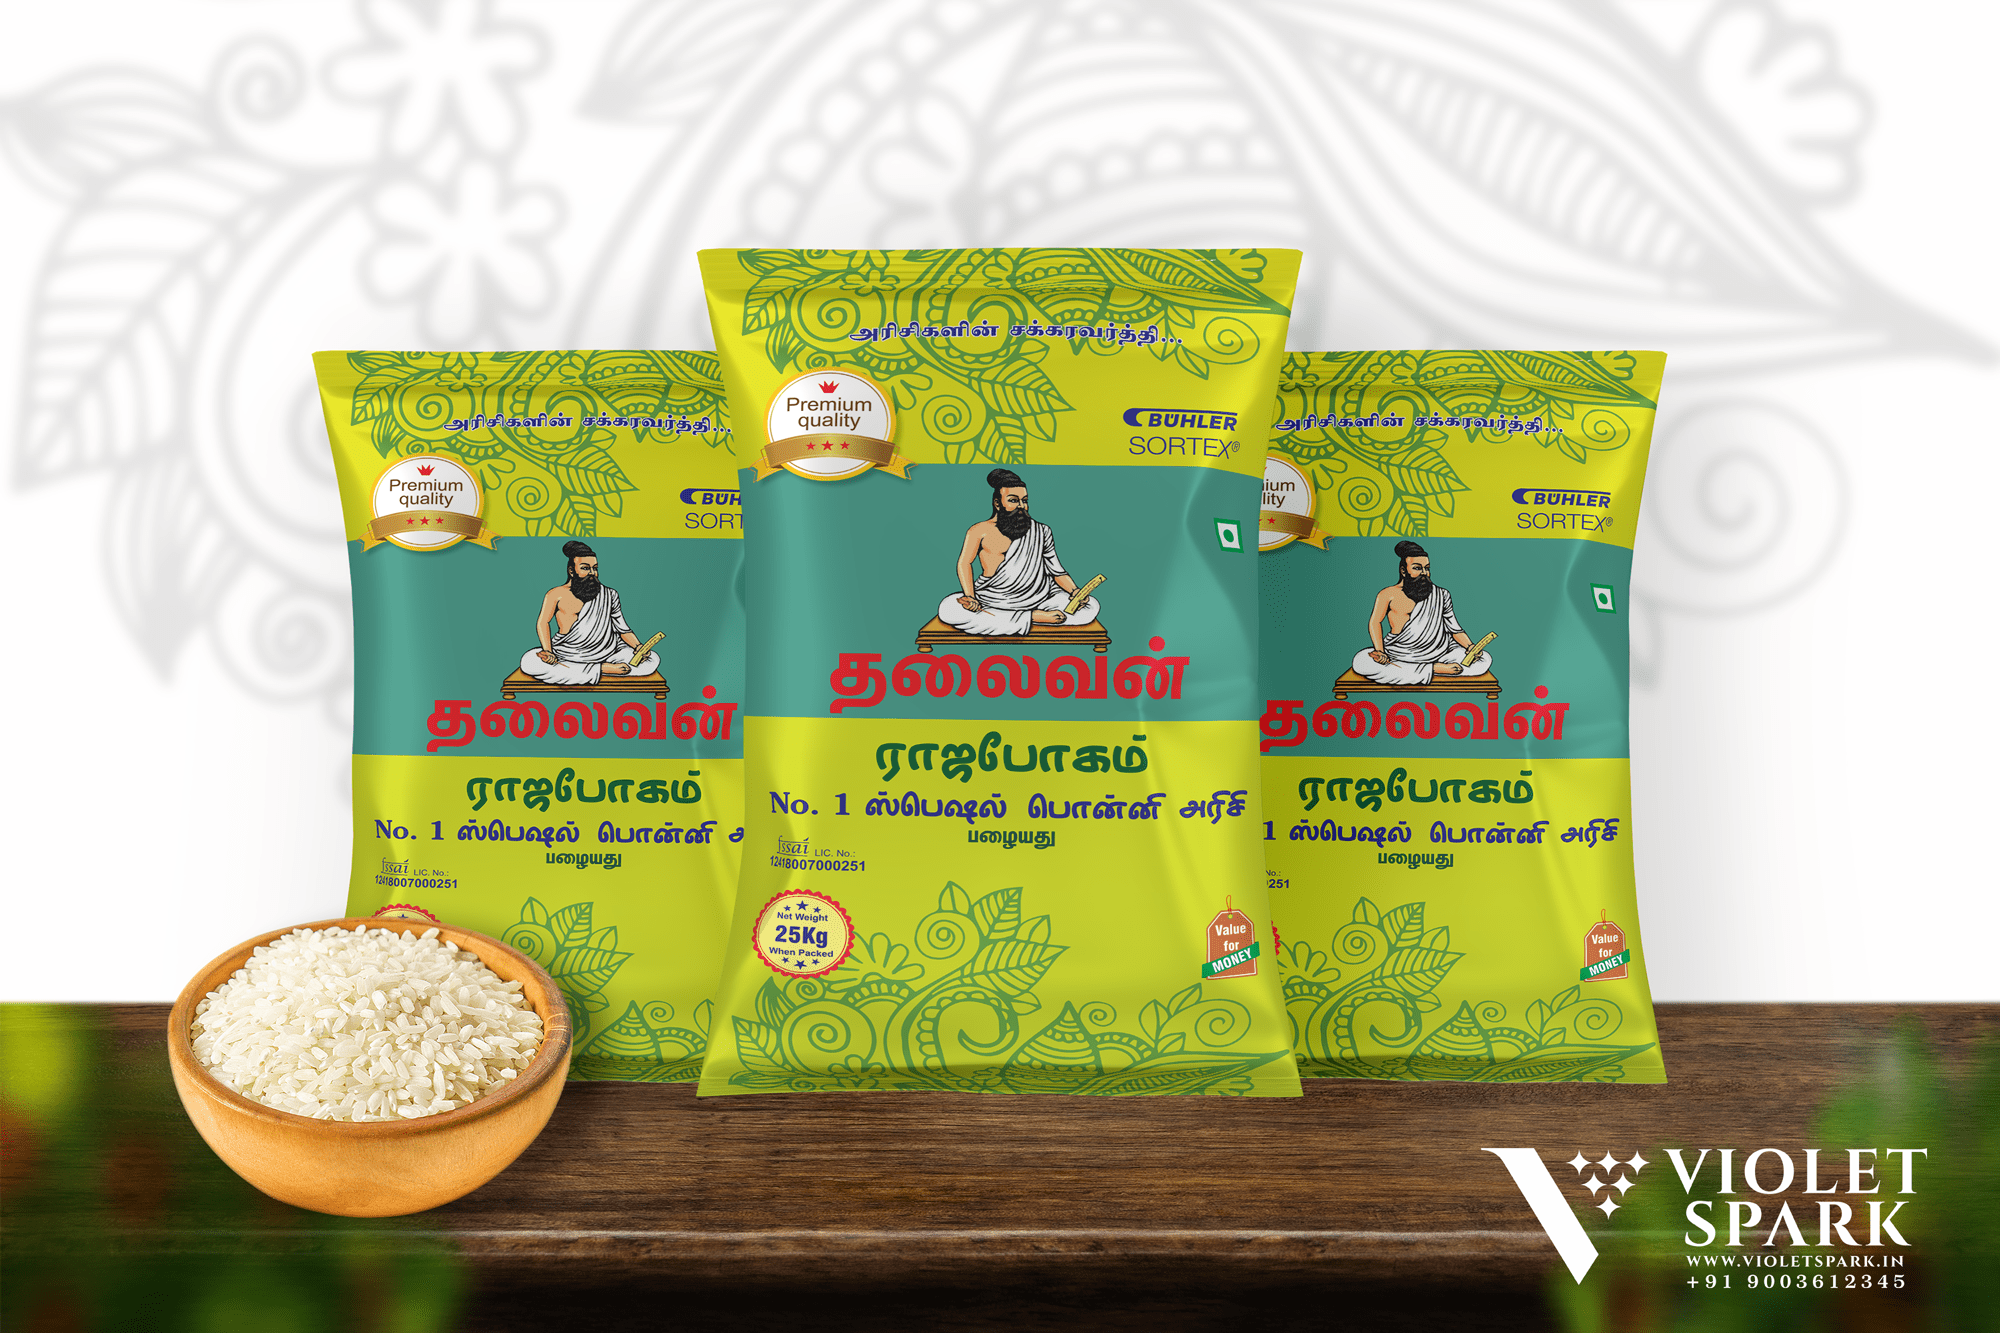 Thalaivan Brand Rajabhogam Rice Bags Branding & Packaging Design in Salem by Creative Prints thecreativeprints